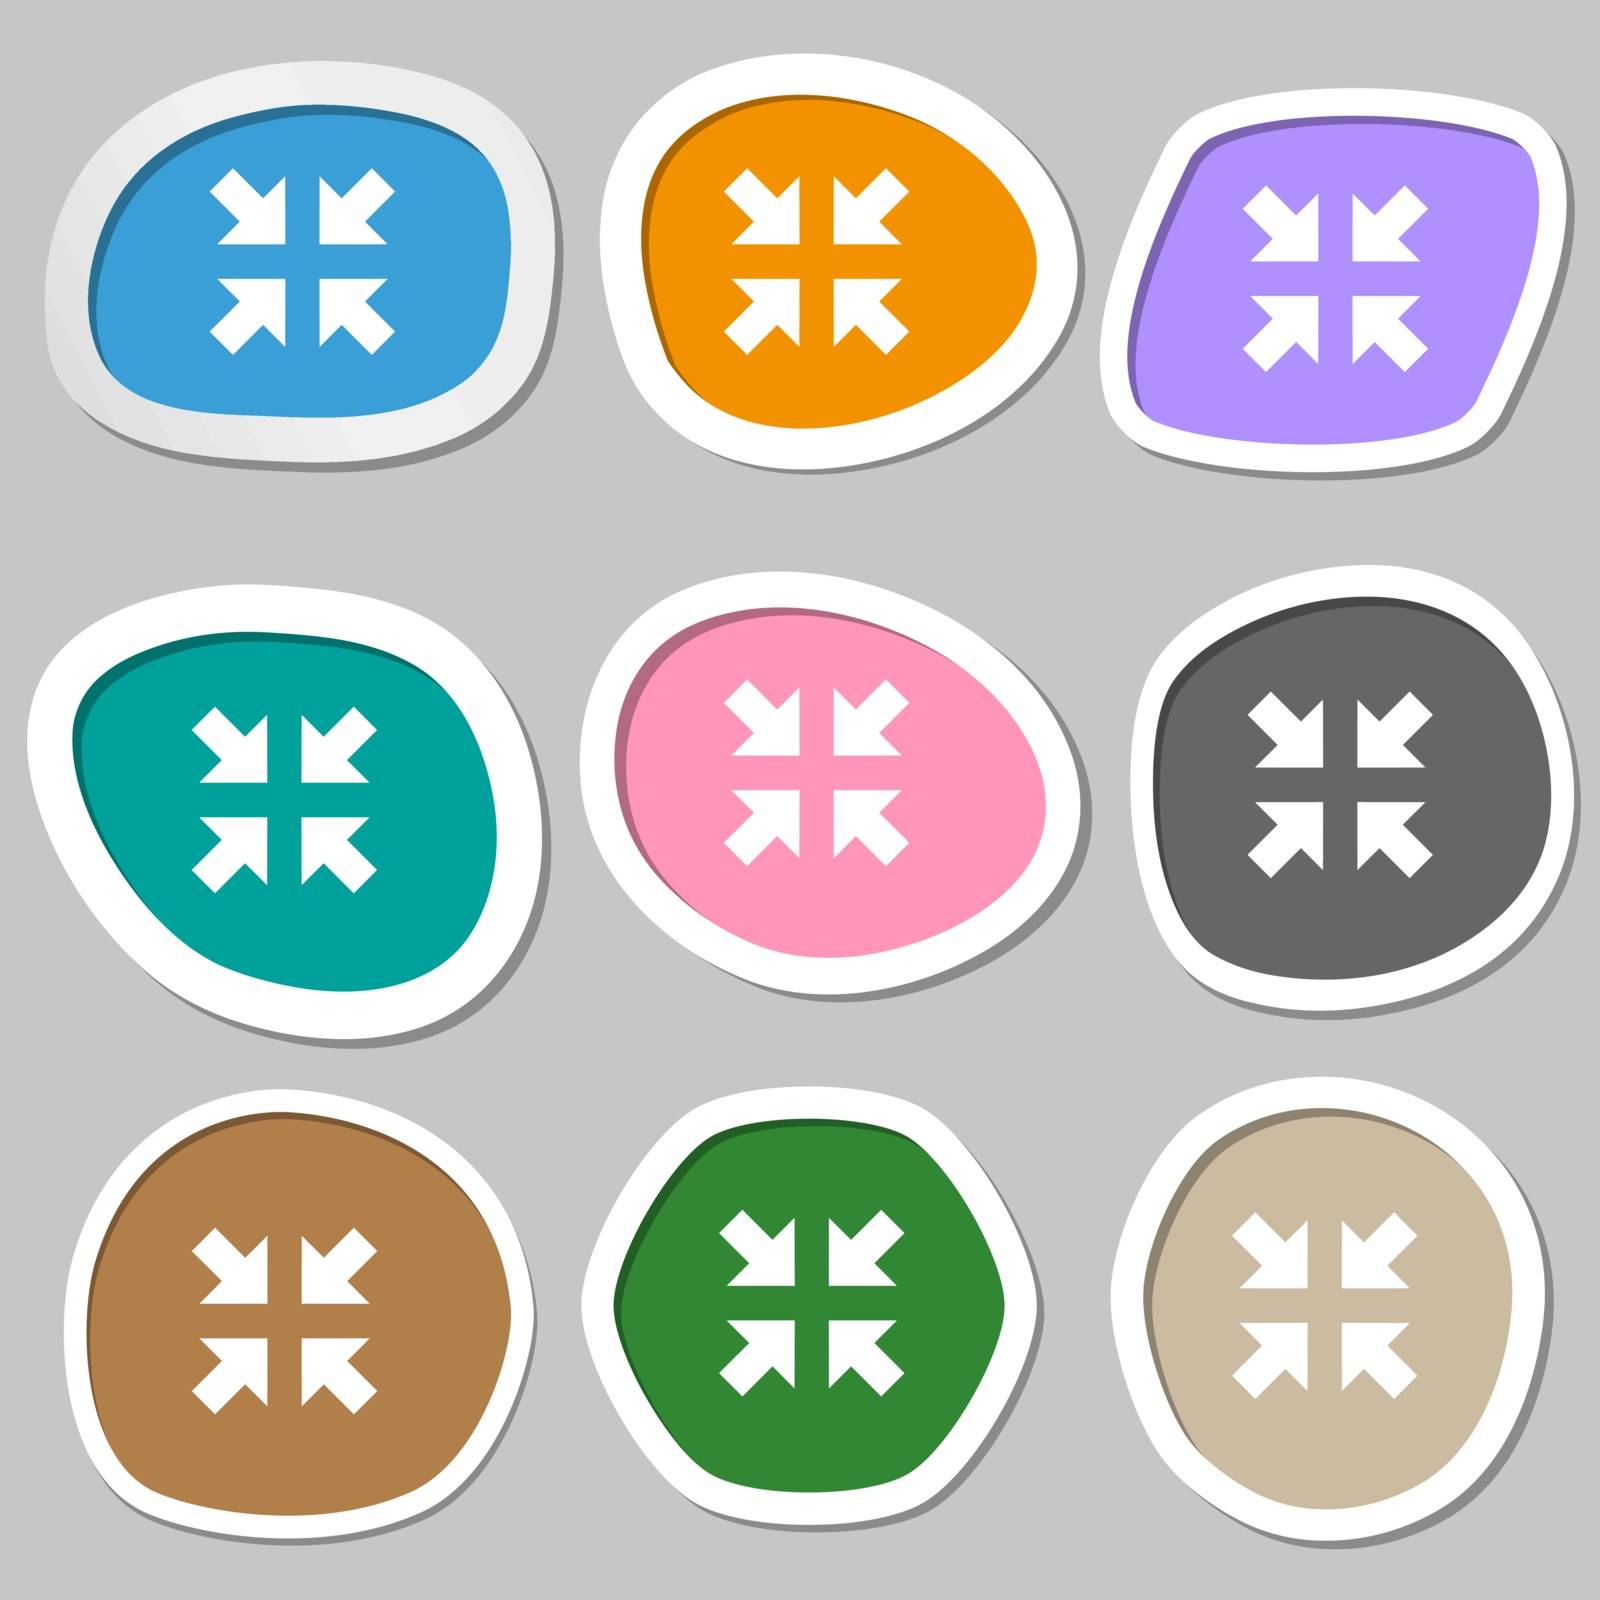 Exit full screen symbols. Multicolored paper stickers. Vector illustration